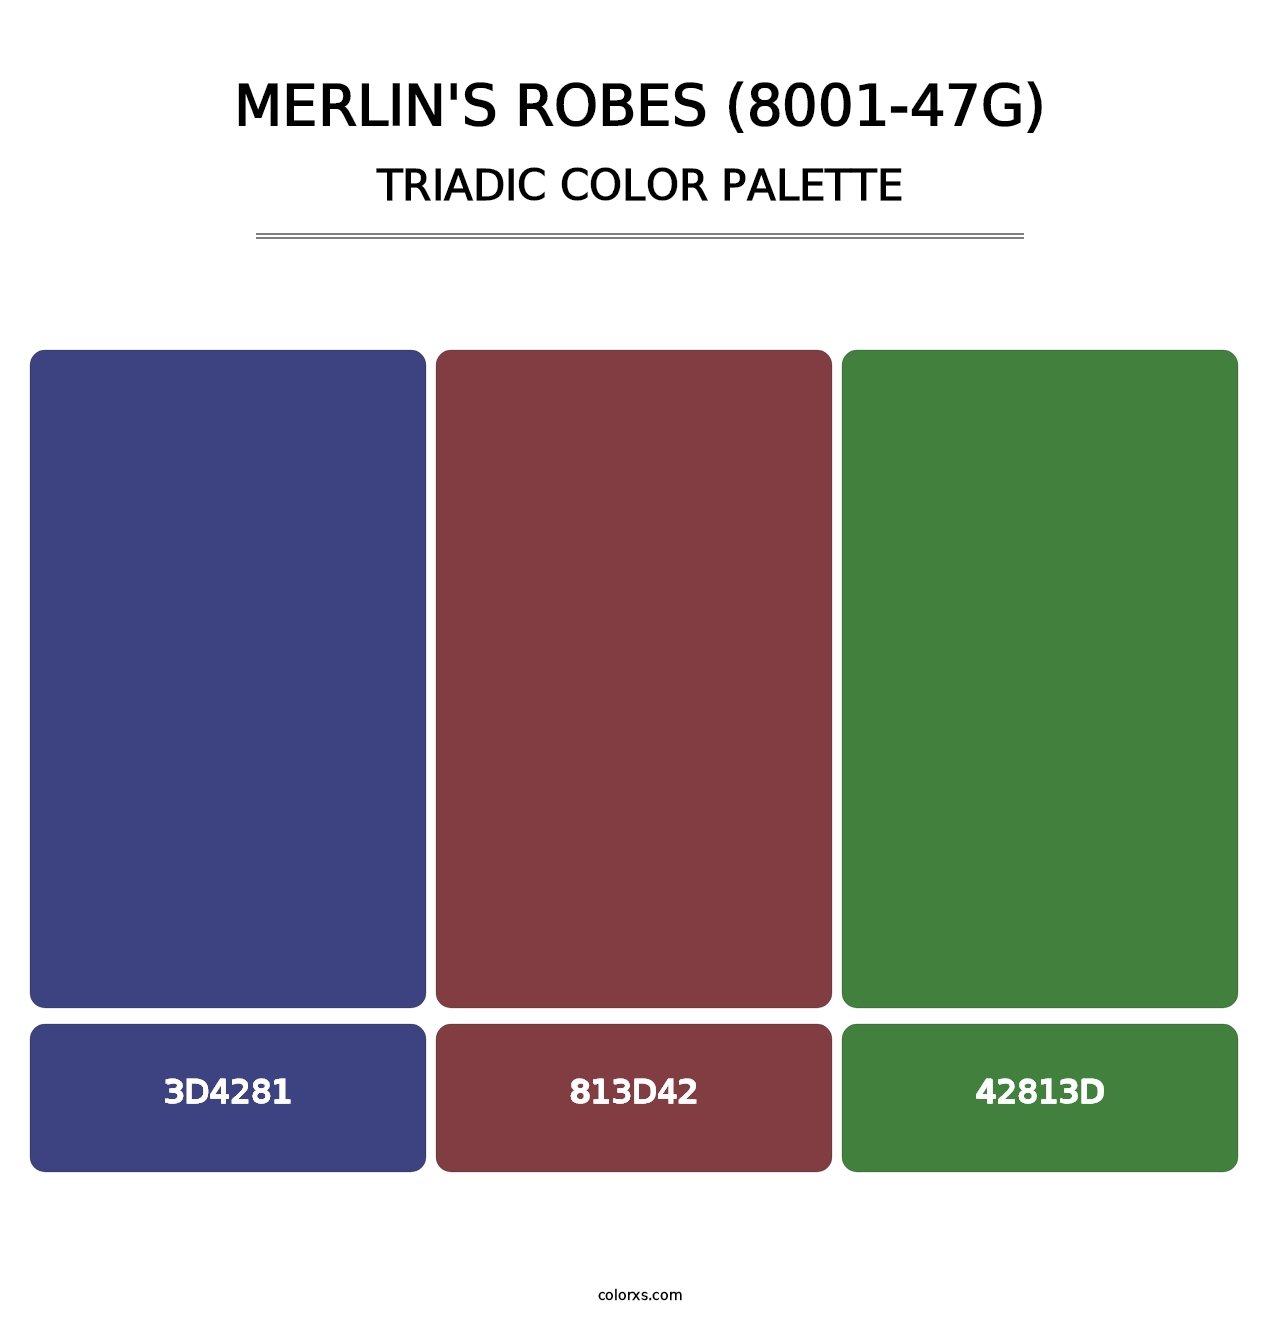 Merlin's Robes (8001-47G) - Triadic Color Palette